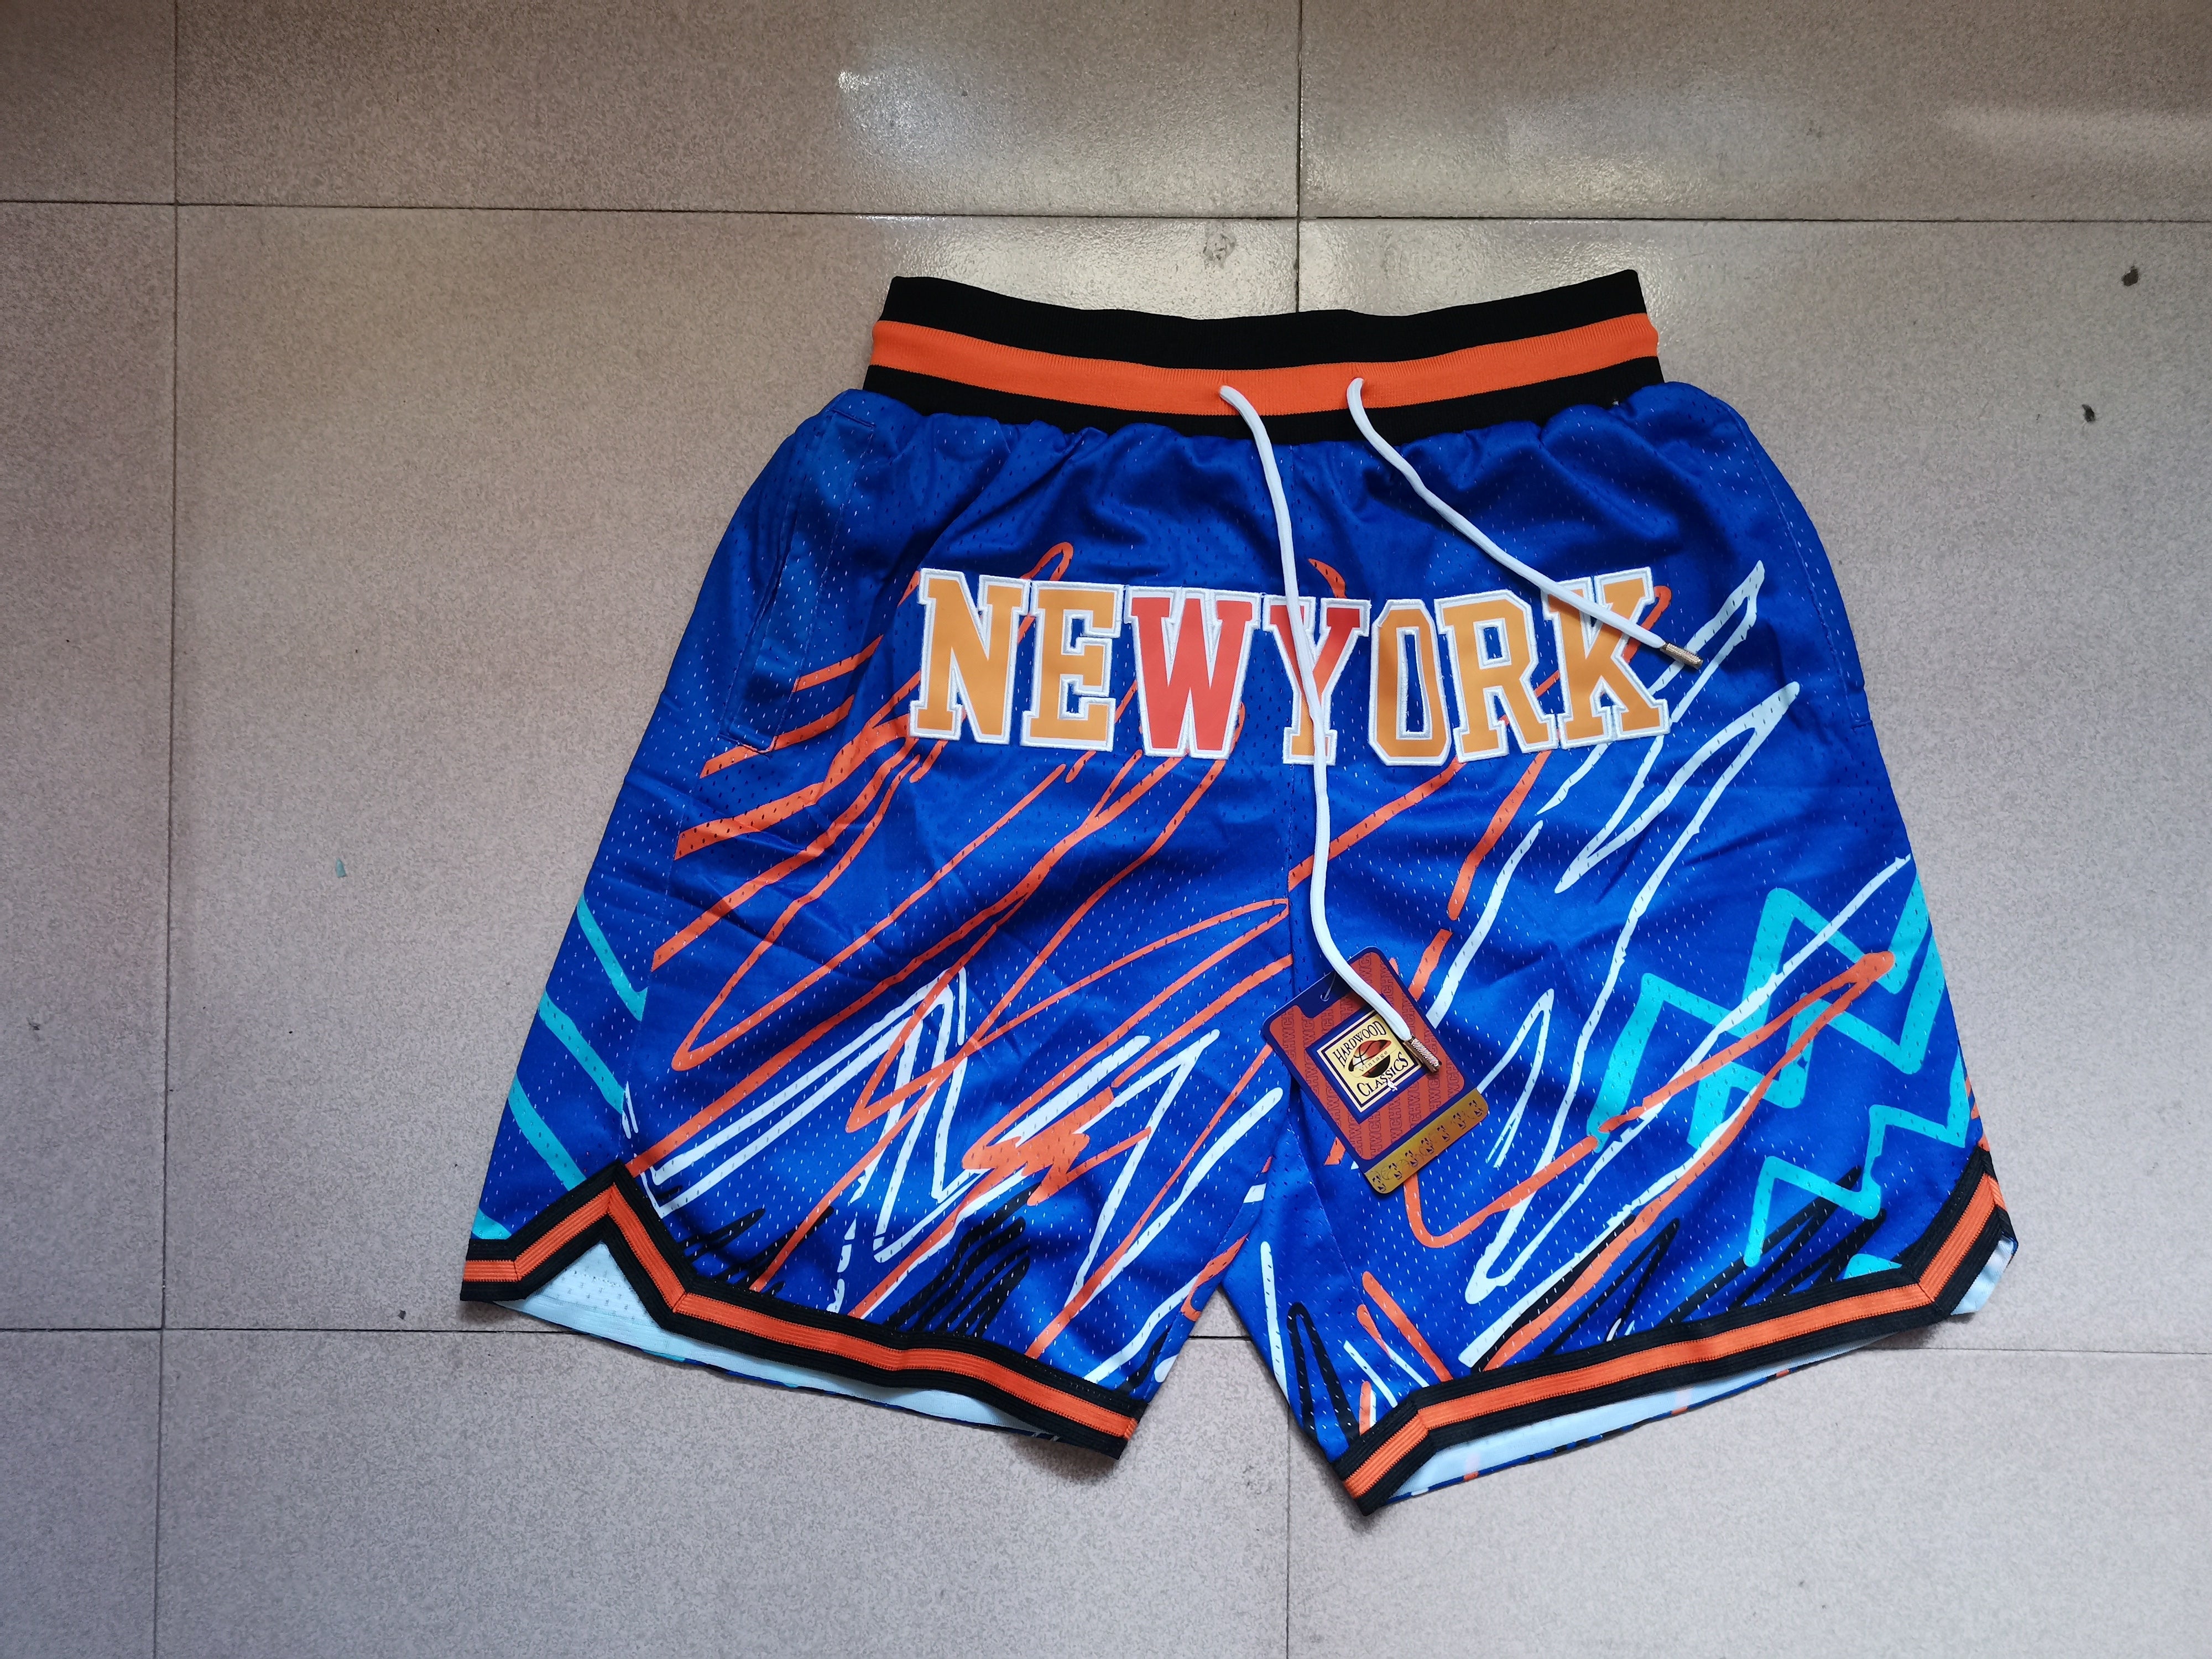 New york blue shorts